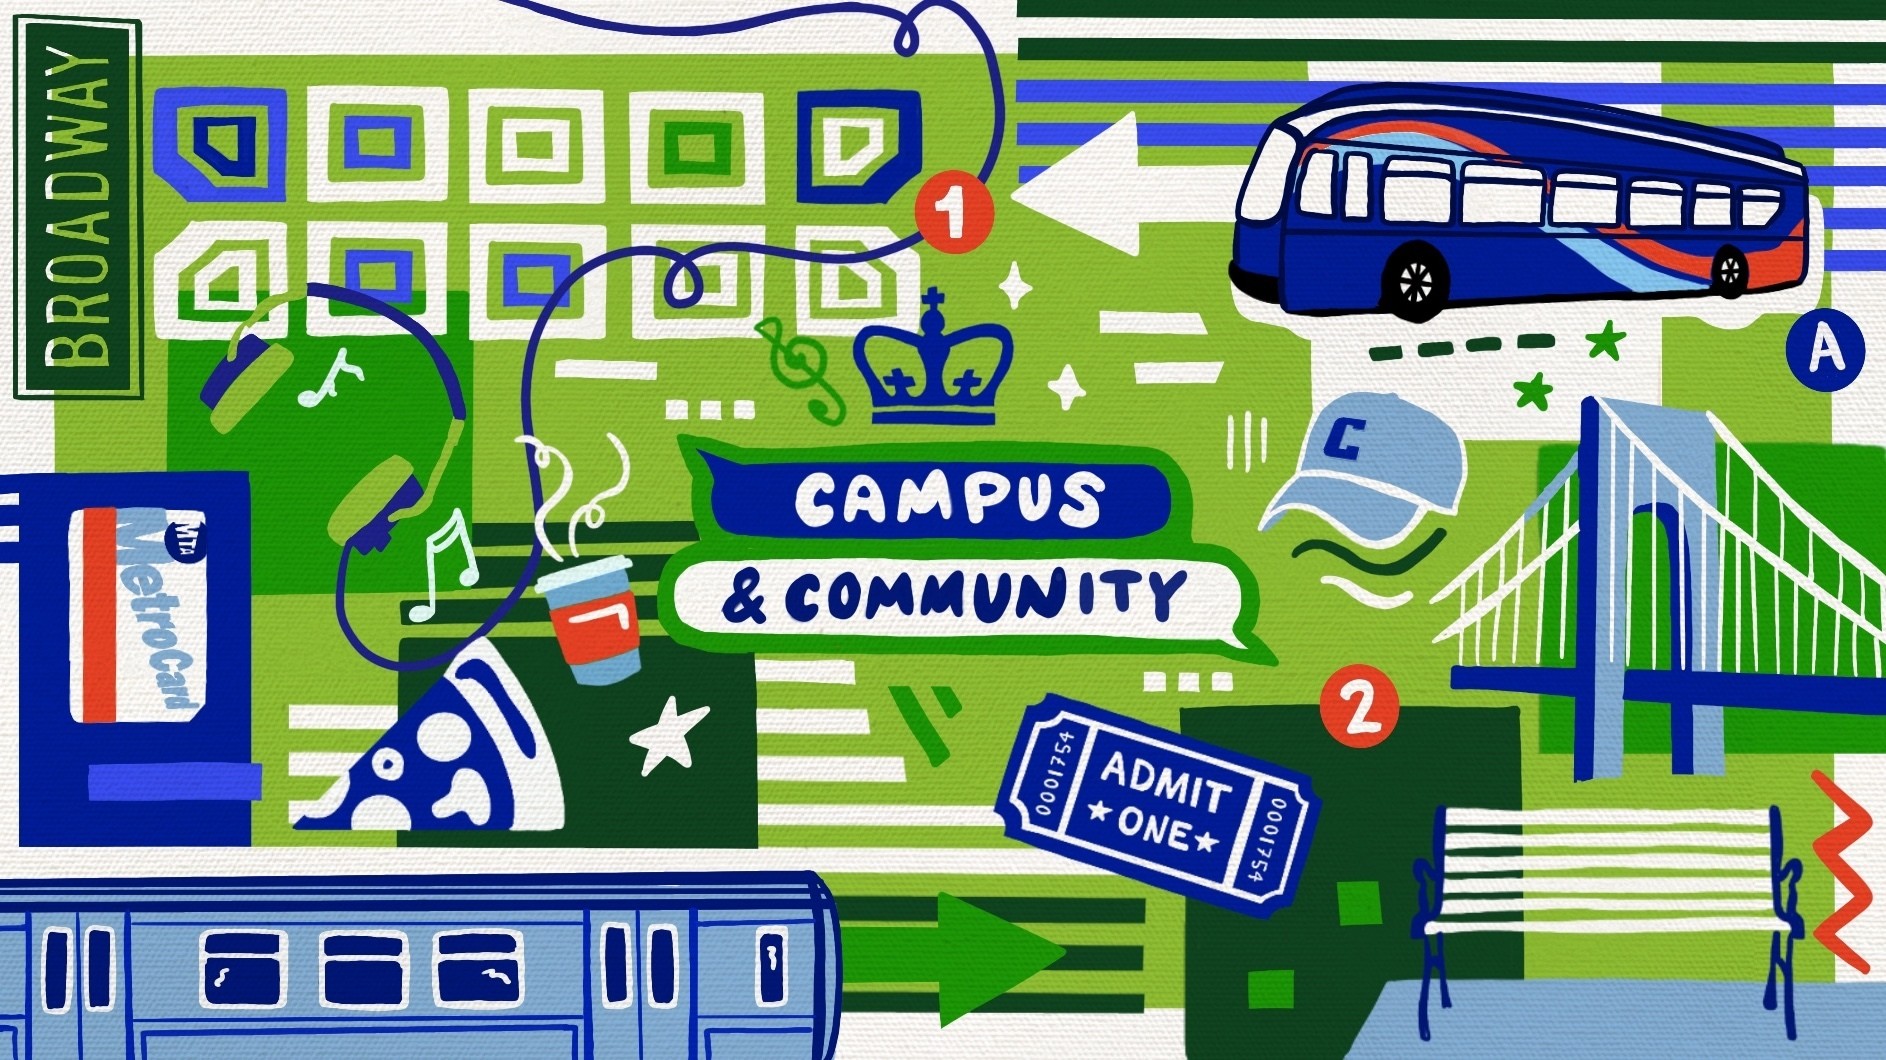 Campus & Community image card